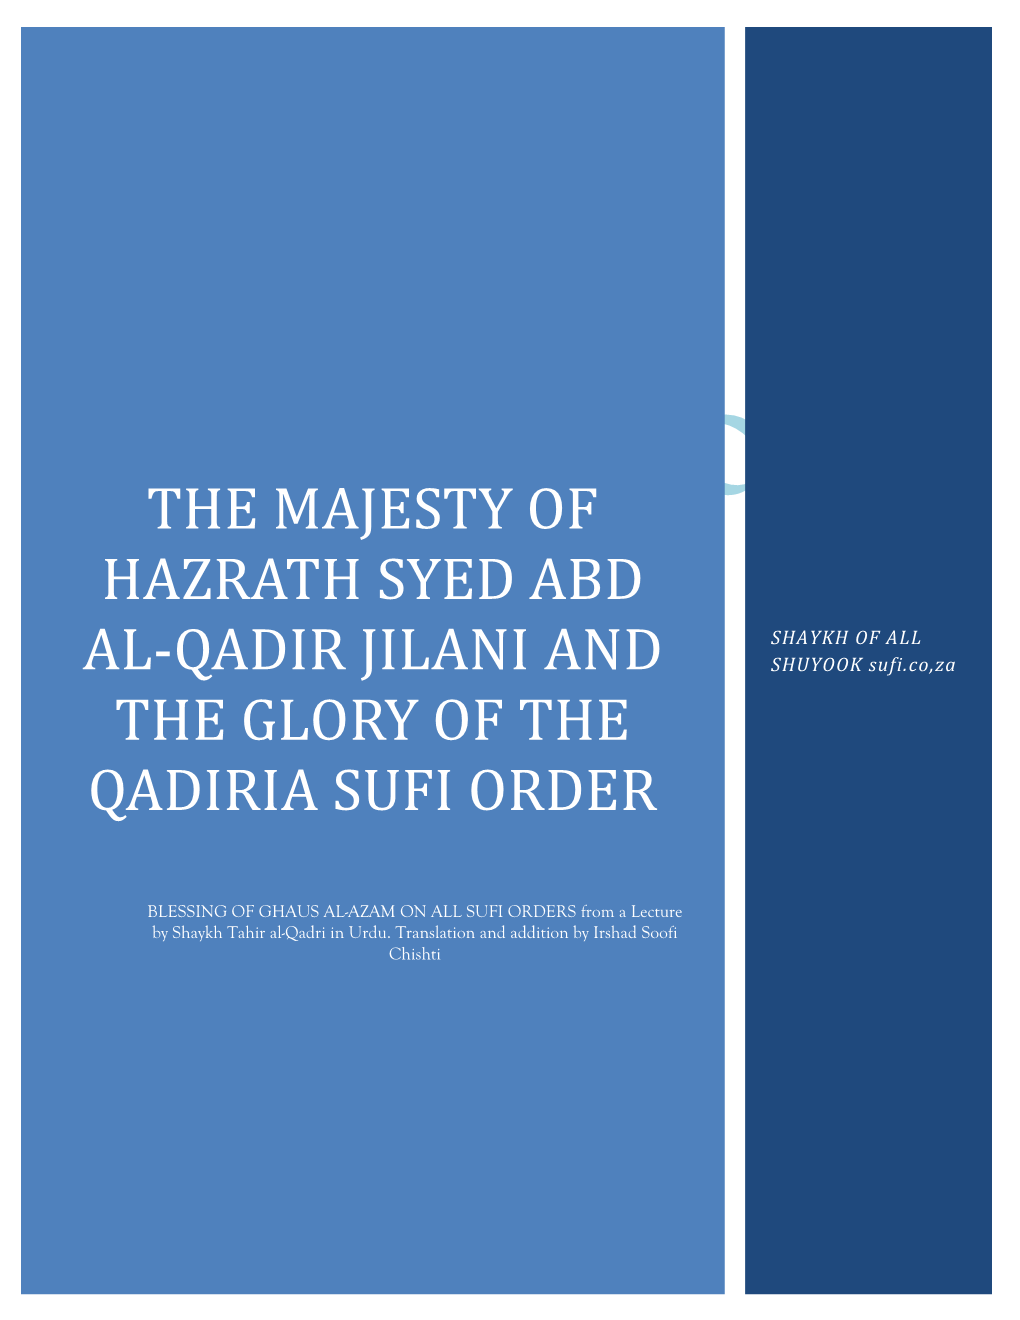 The Majesty of Hazrath Syed Abd Al-Qadir Jilani and the Glory of the Qadiria Sufi Order